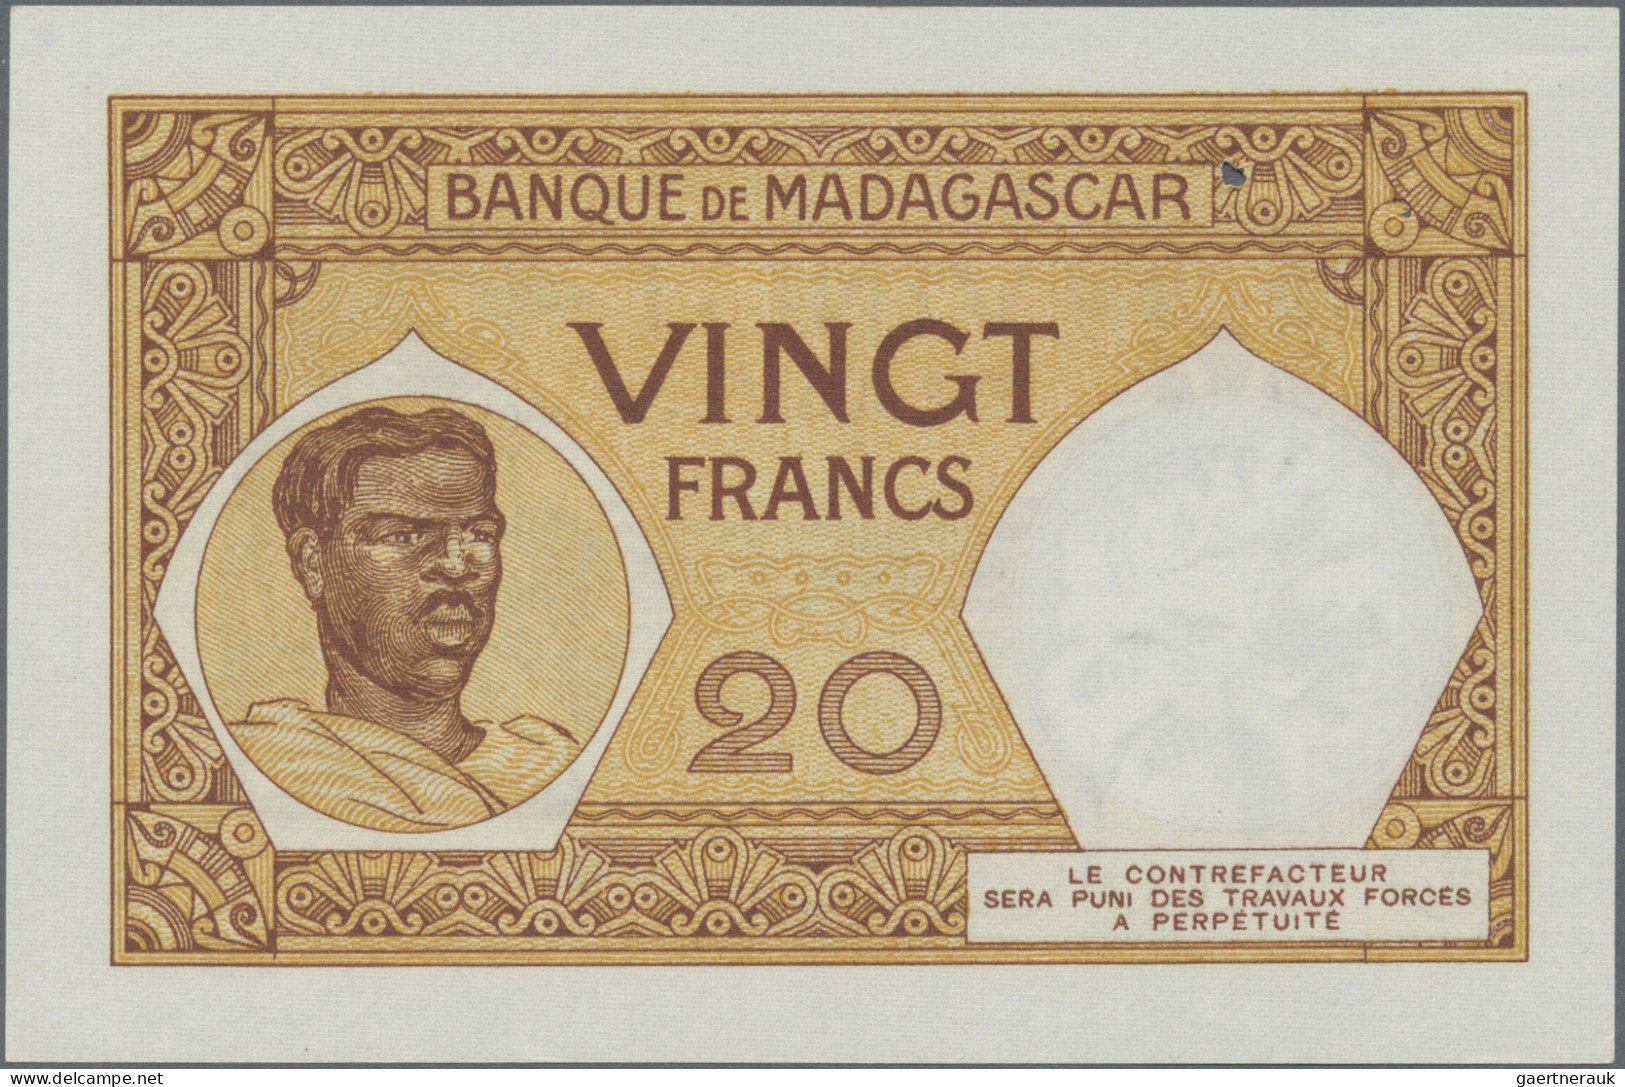 Madagascar: Banque de Madagascar, nice lot with 4 banknotes, series 1930-1942, w